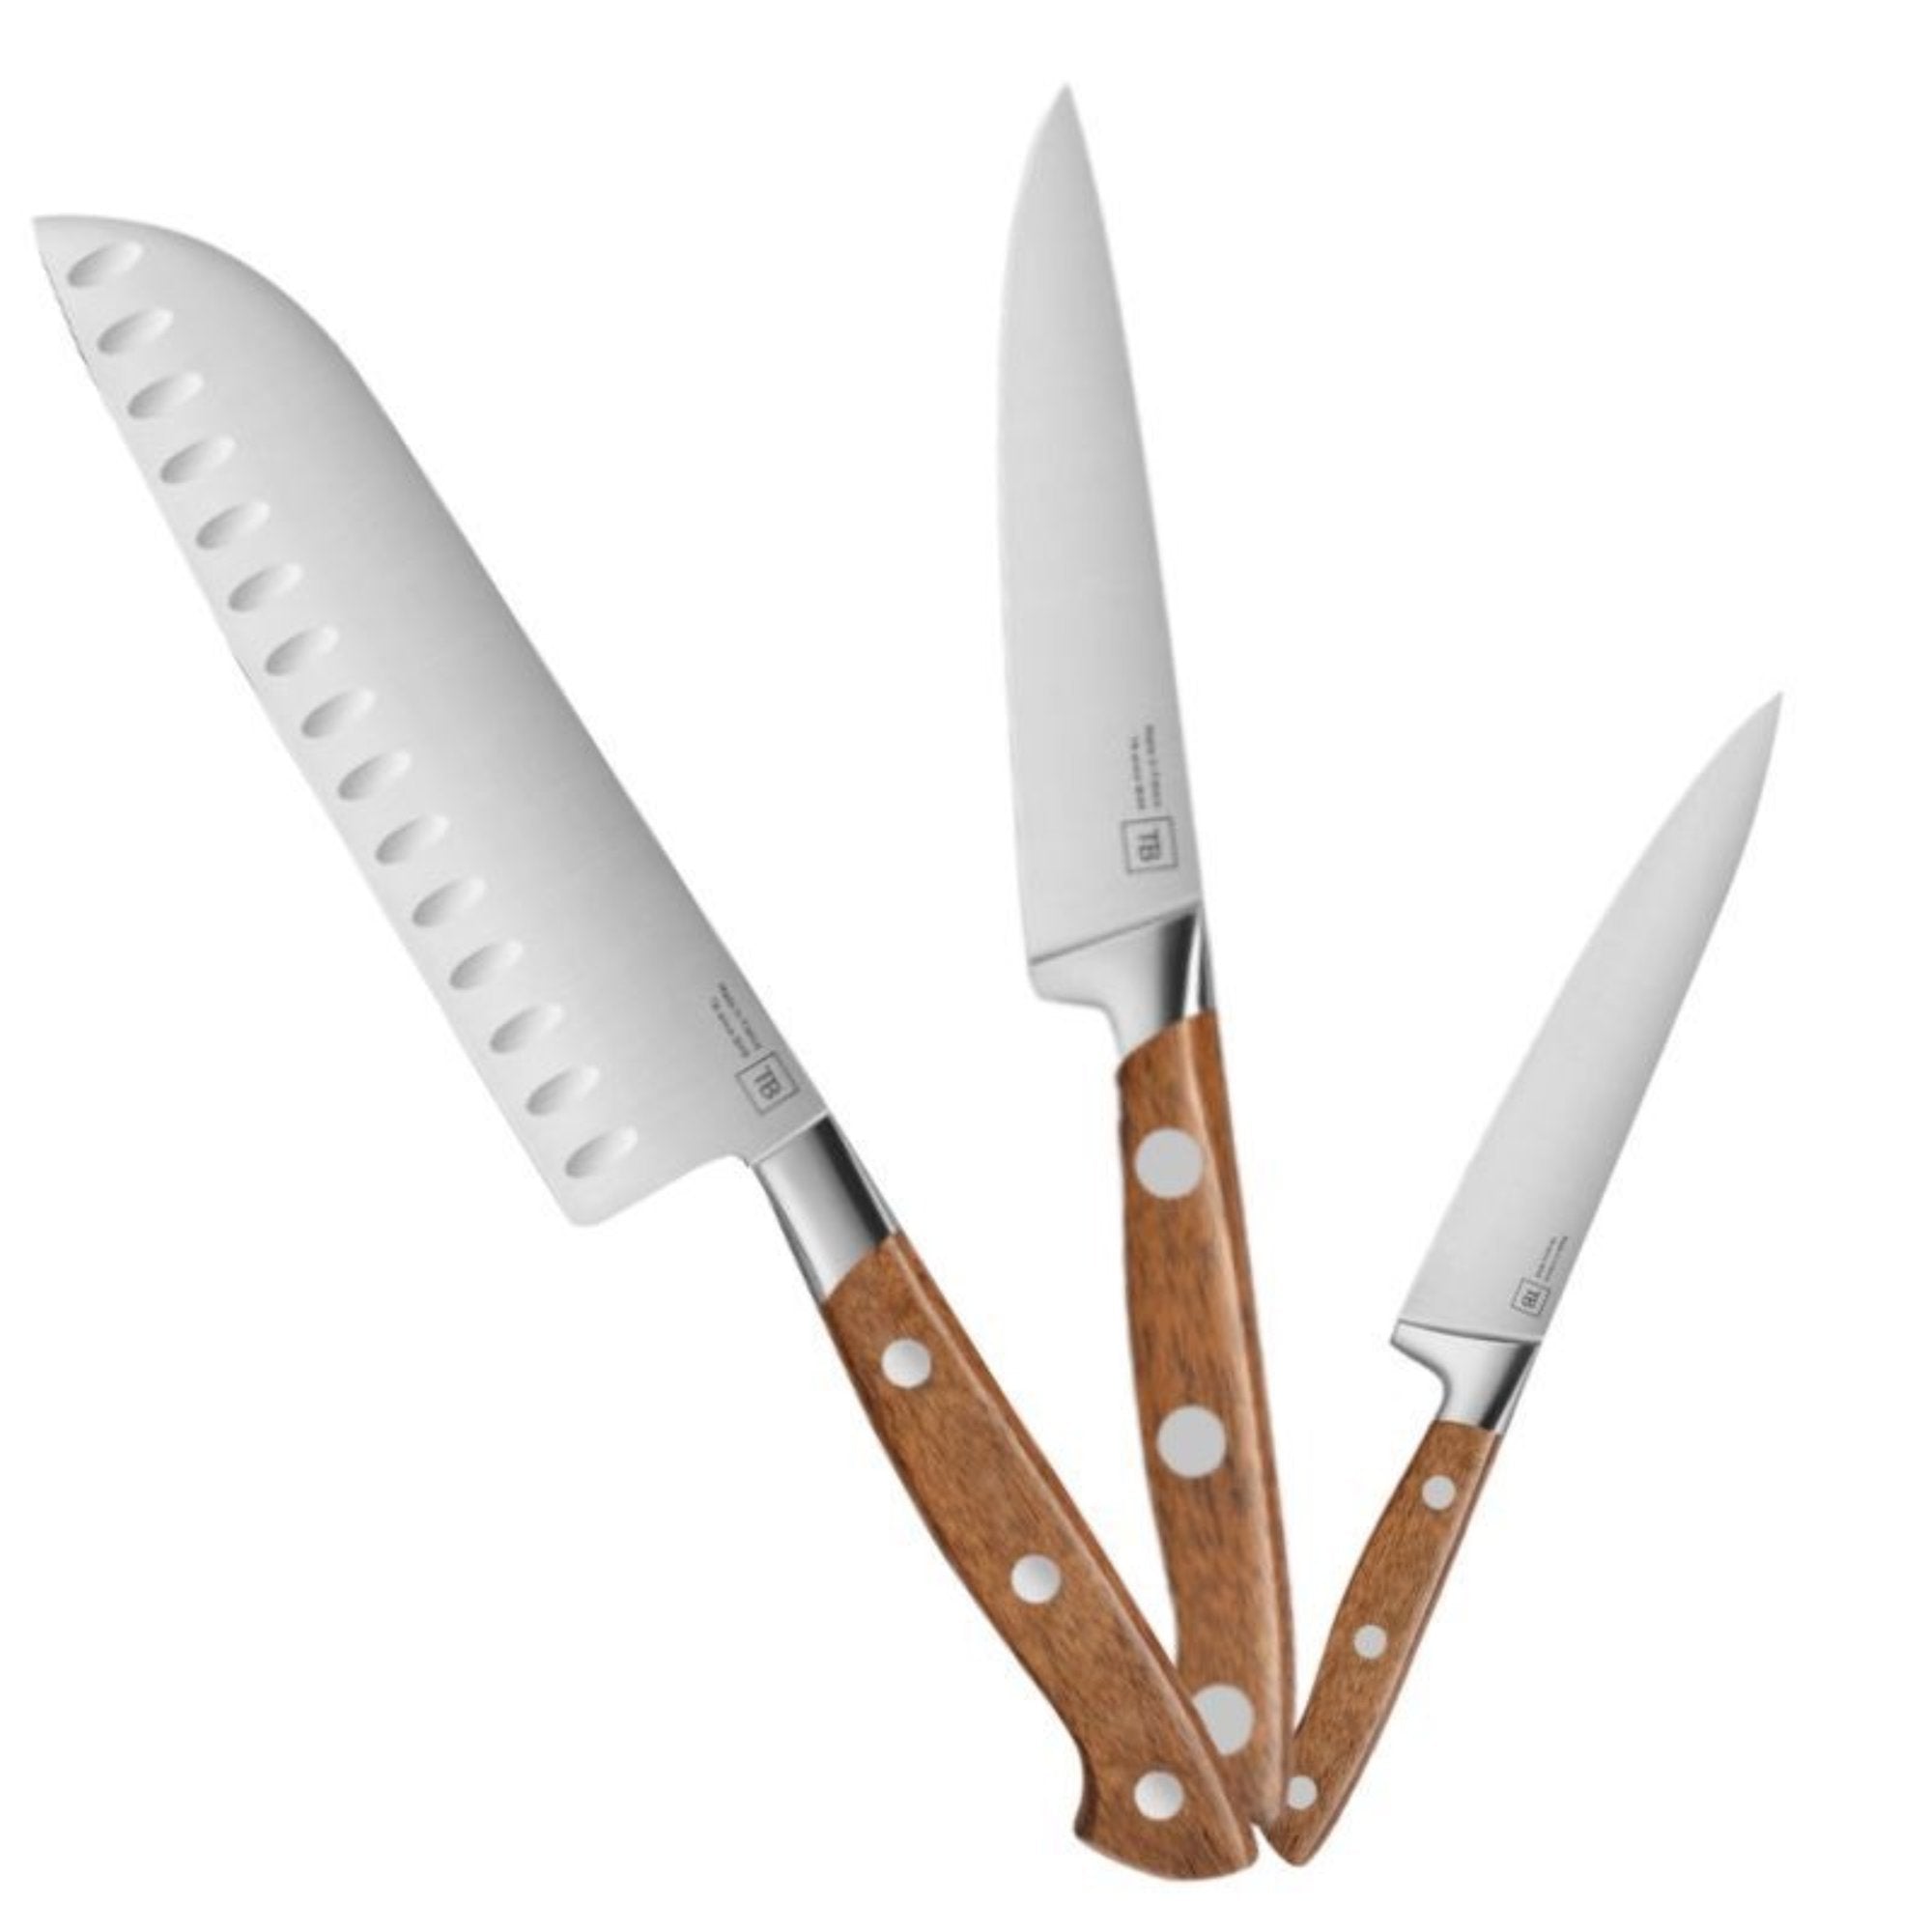 TB Tarrerias Bonjean - Georges - 3 Piece Kitchen Knife Set With Walnut Handles